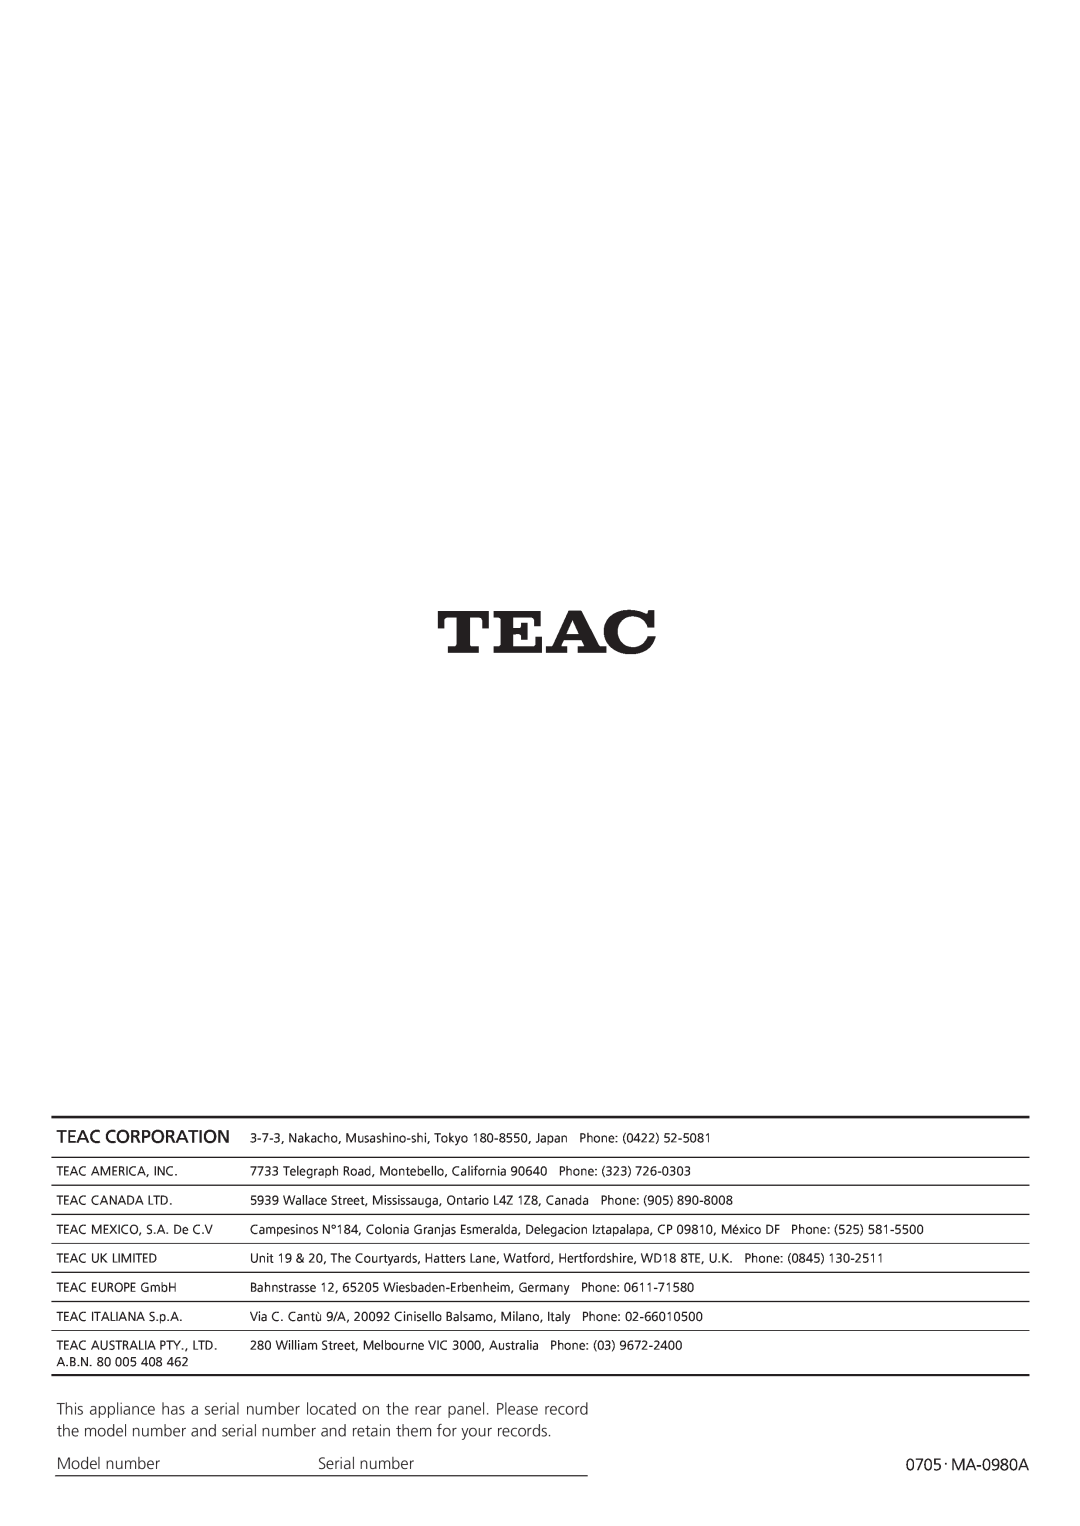 Teac AG-790 owner manual Teac Corporation, Model number, Serial number 